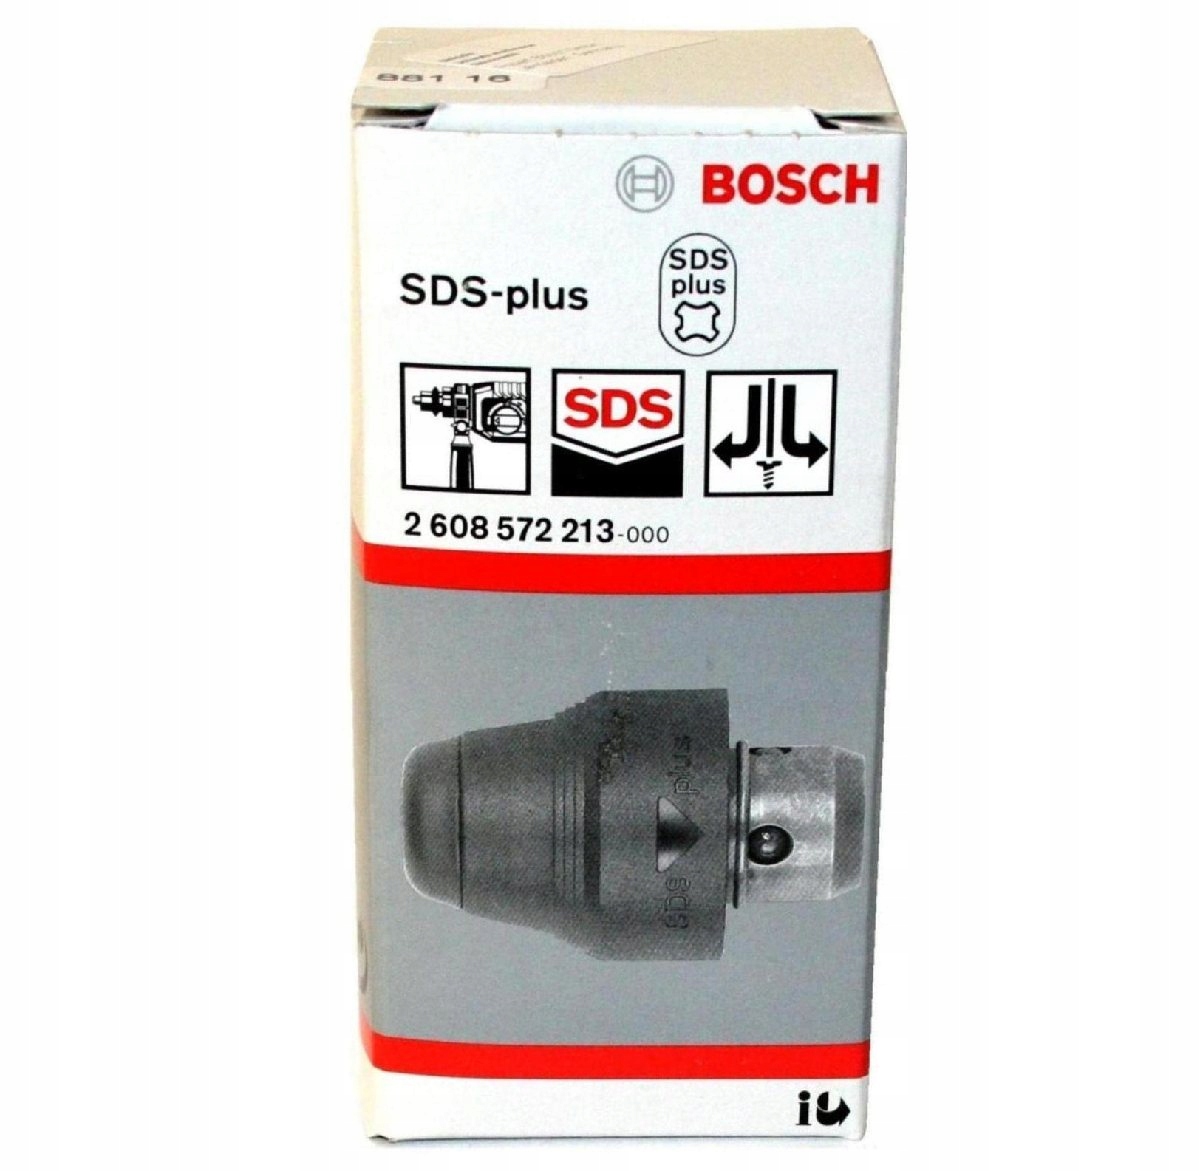 DRŽIAK SDS-PLUS pre GBH 2-26 DFR BOSCH - ORIGINÁL Značka Bosch